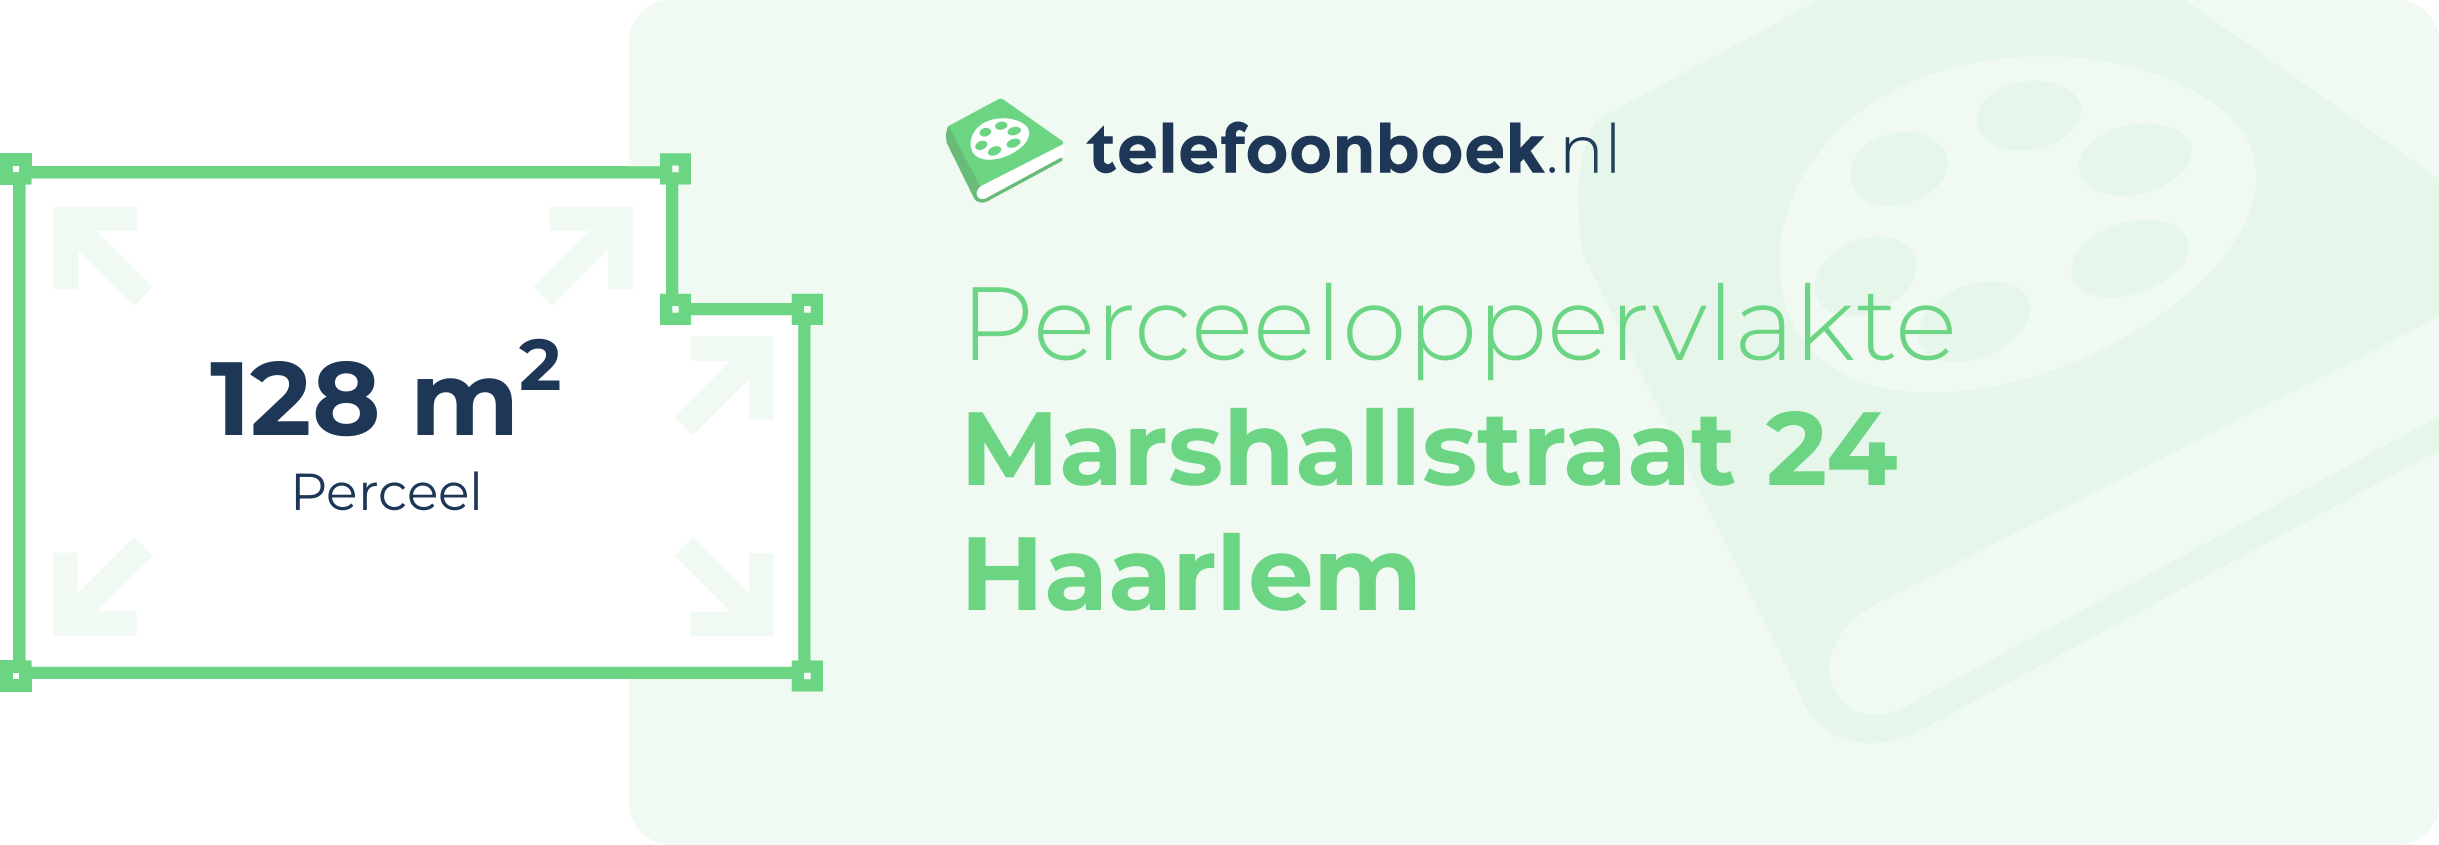 Perceeloppervlakte Marshallstraat 24 Haarlem